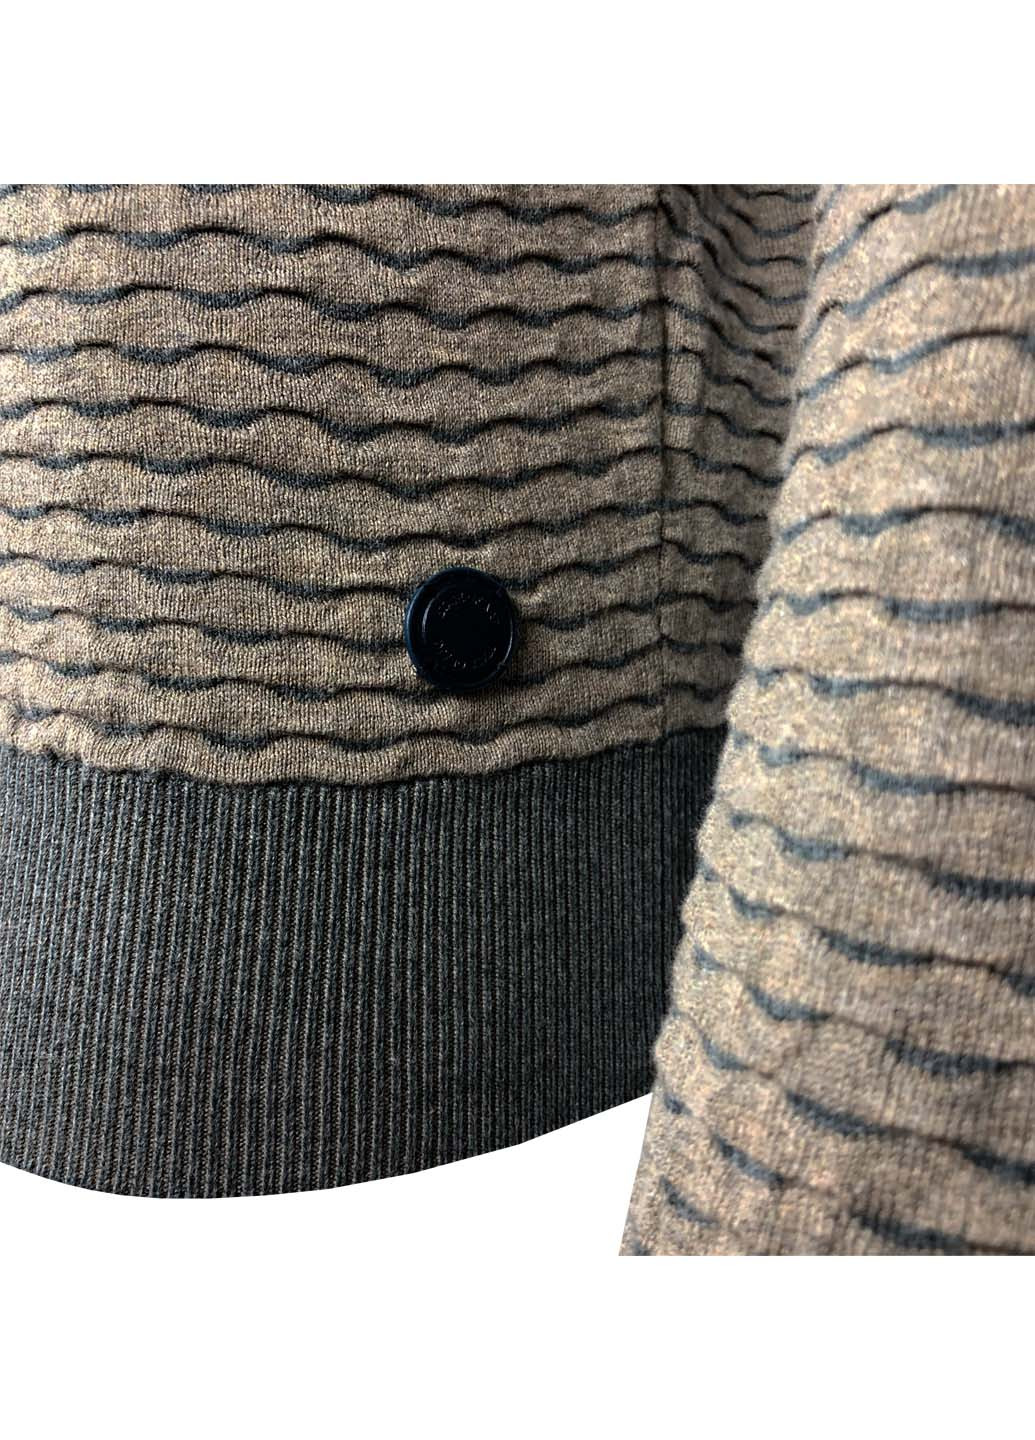 Коричневый демисезонный мужской свитер джемпер джемпер State of Art